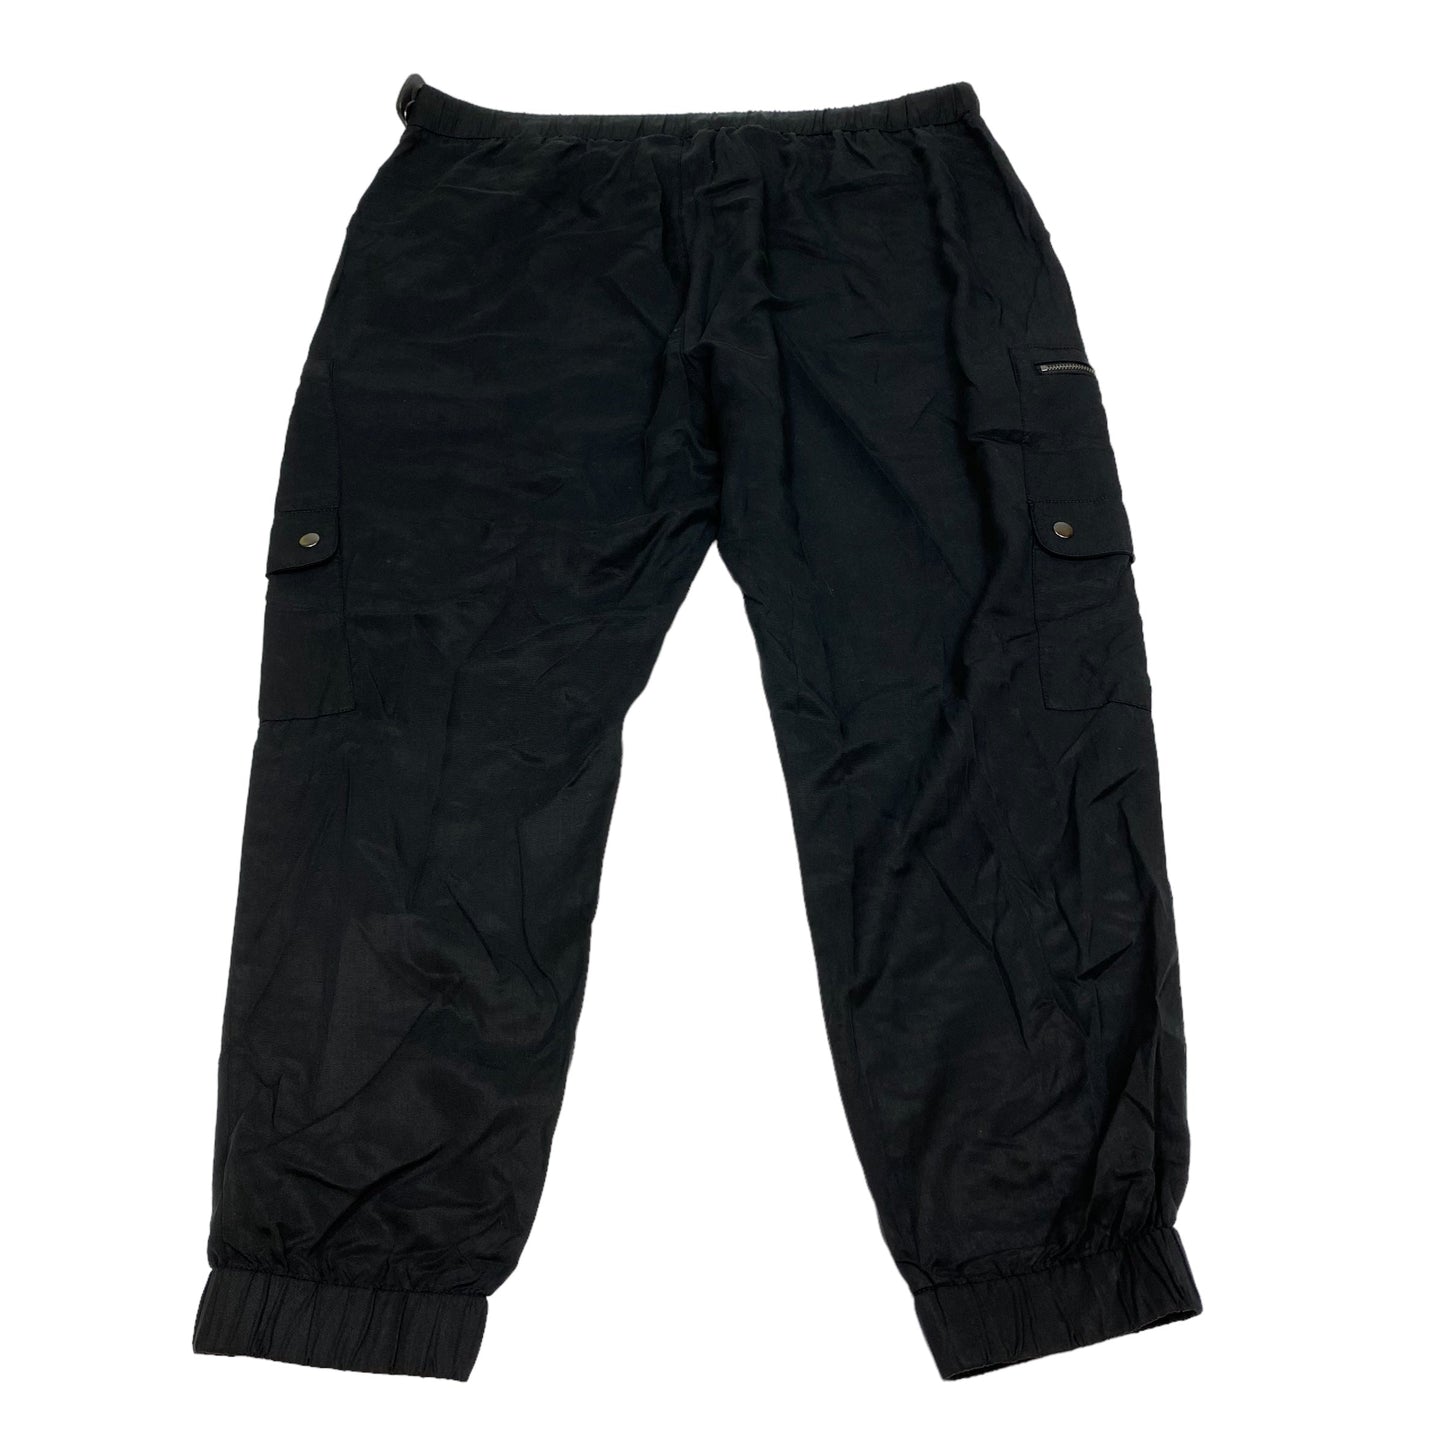 Black Pants Joggers Banana Republic, Size Xl